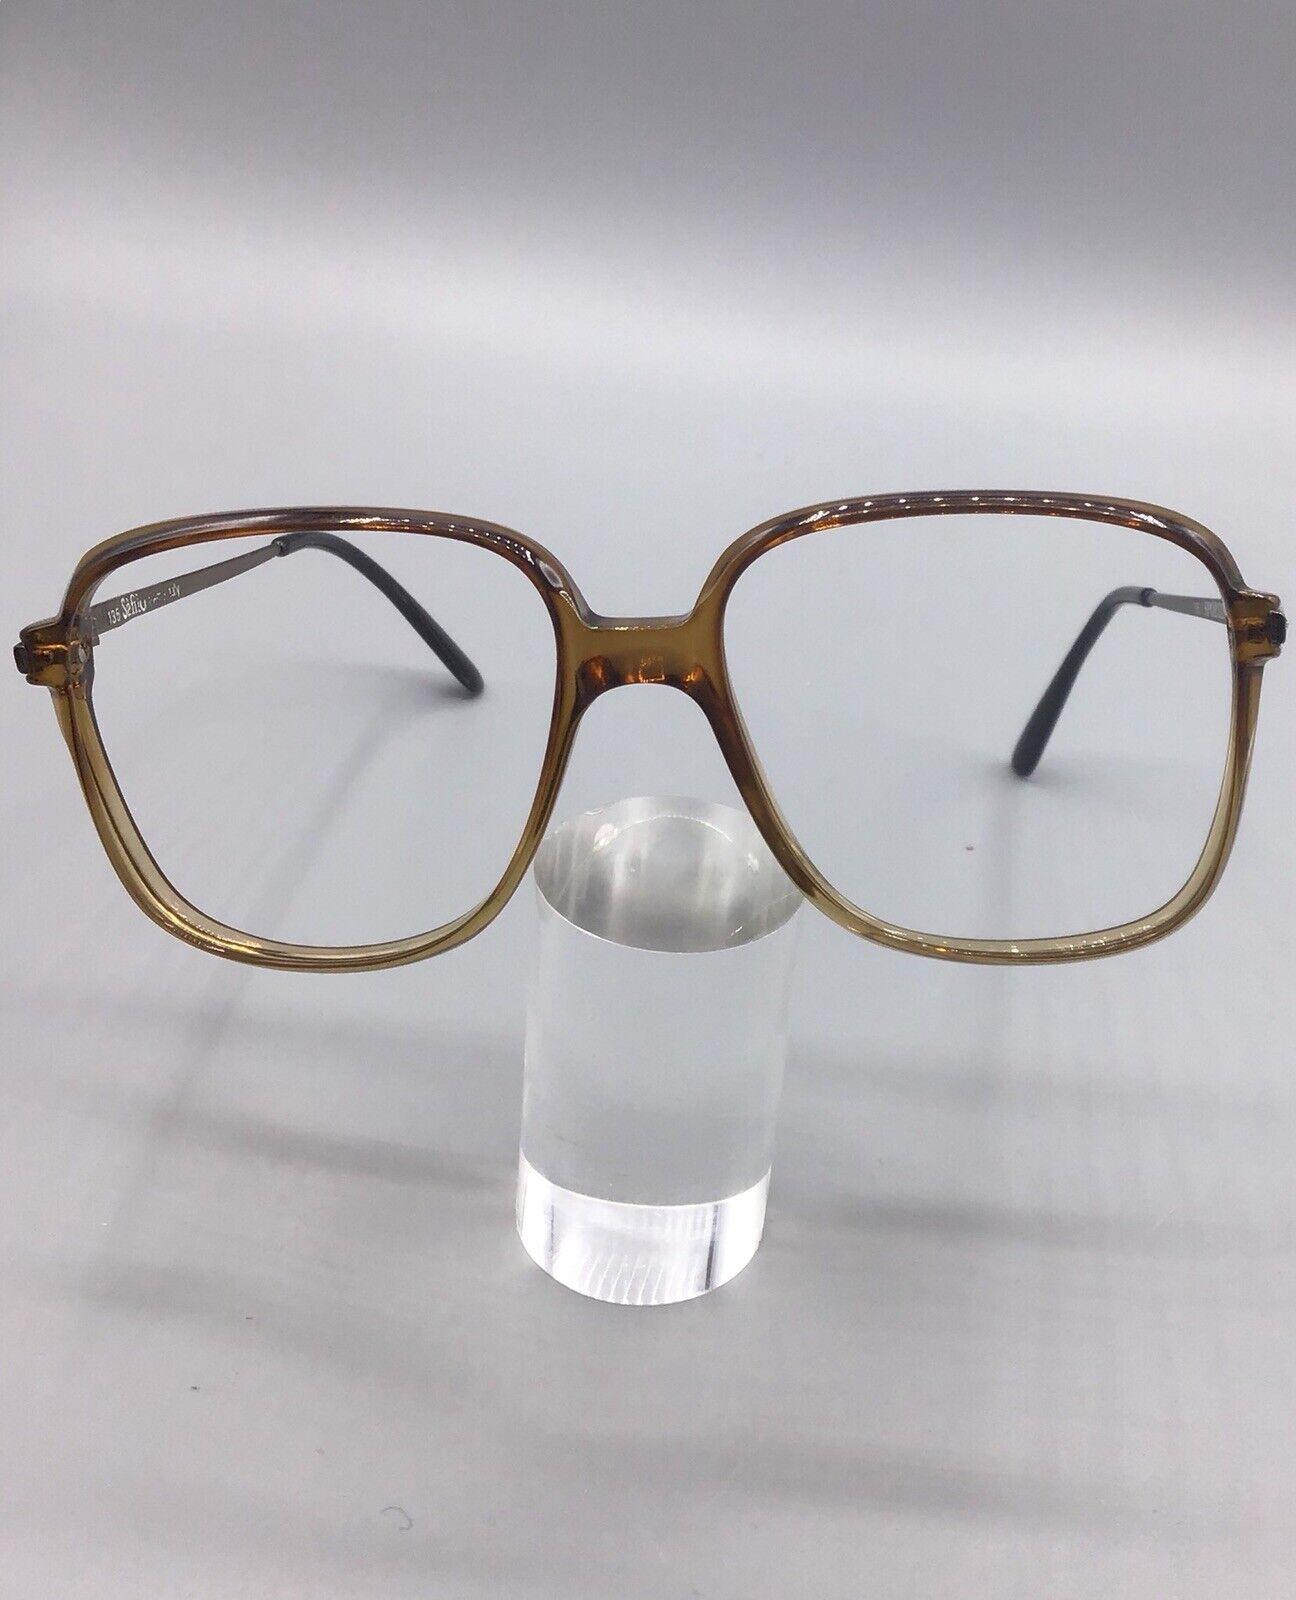 Safilo Frame italy occhiale vintage sporting 204 786 brillen lunettes